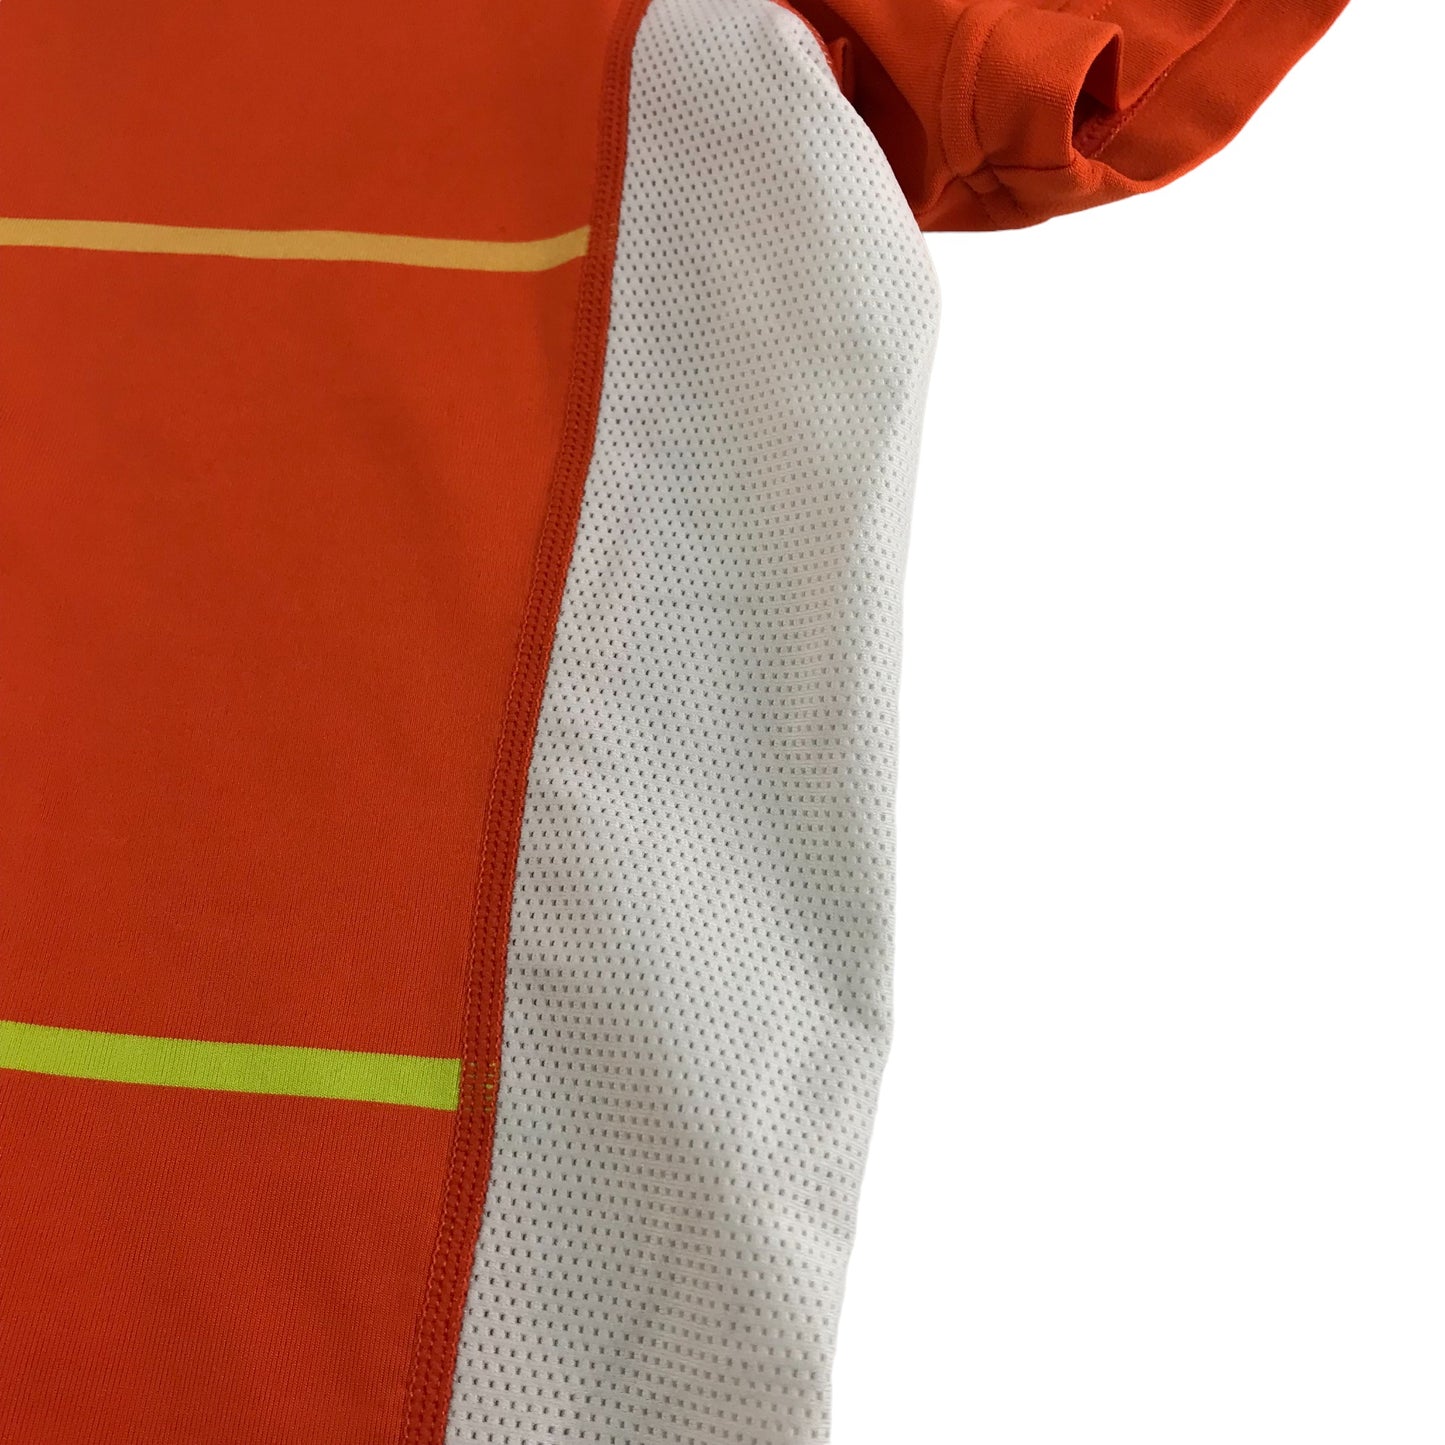 Nike Sport Top Size Men's L Orange Pink Yellow Stripy Pattern Short Sleeve